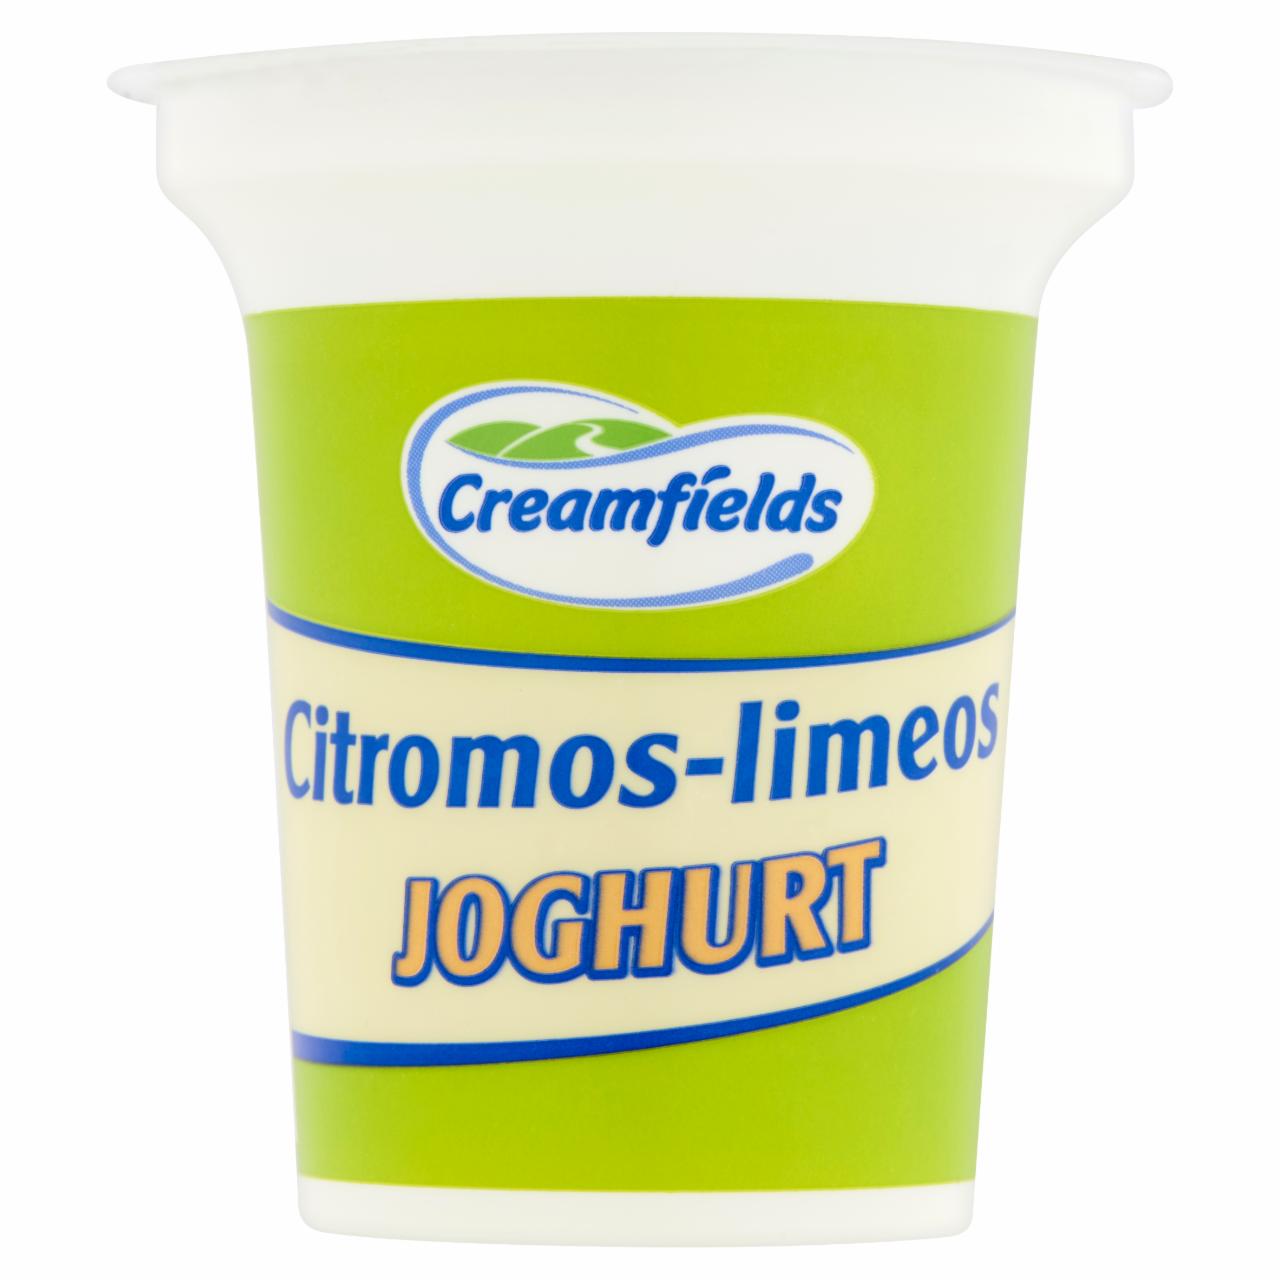 Képek - Creamfields citromos-limeos joghurt 140 g